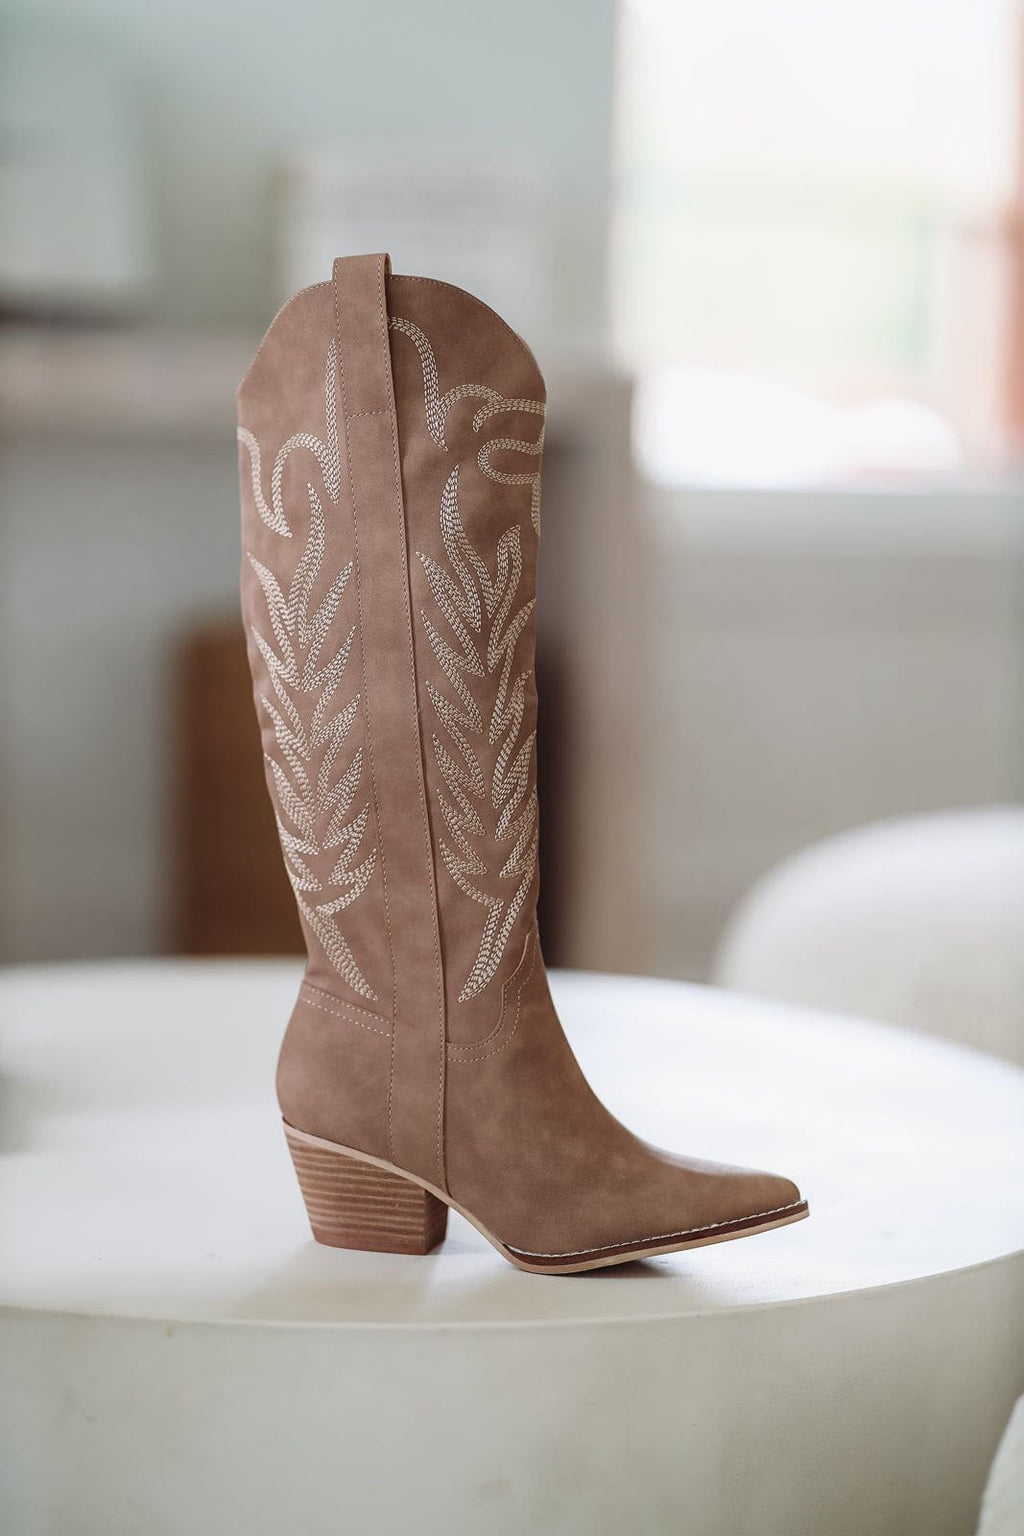 HAZEL & OLIVE Going Country Western Cowboy Boots -Cedarwood Tan